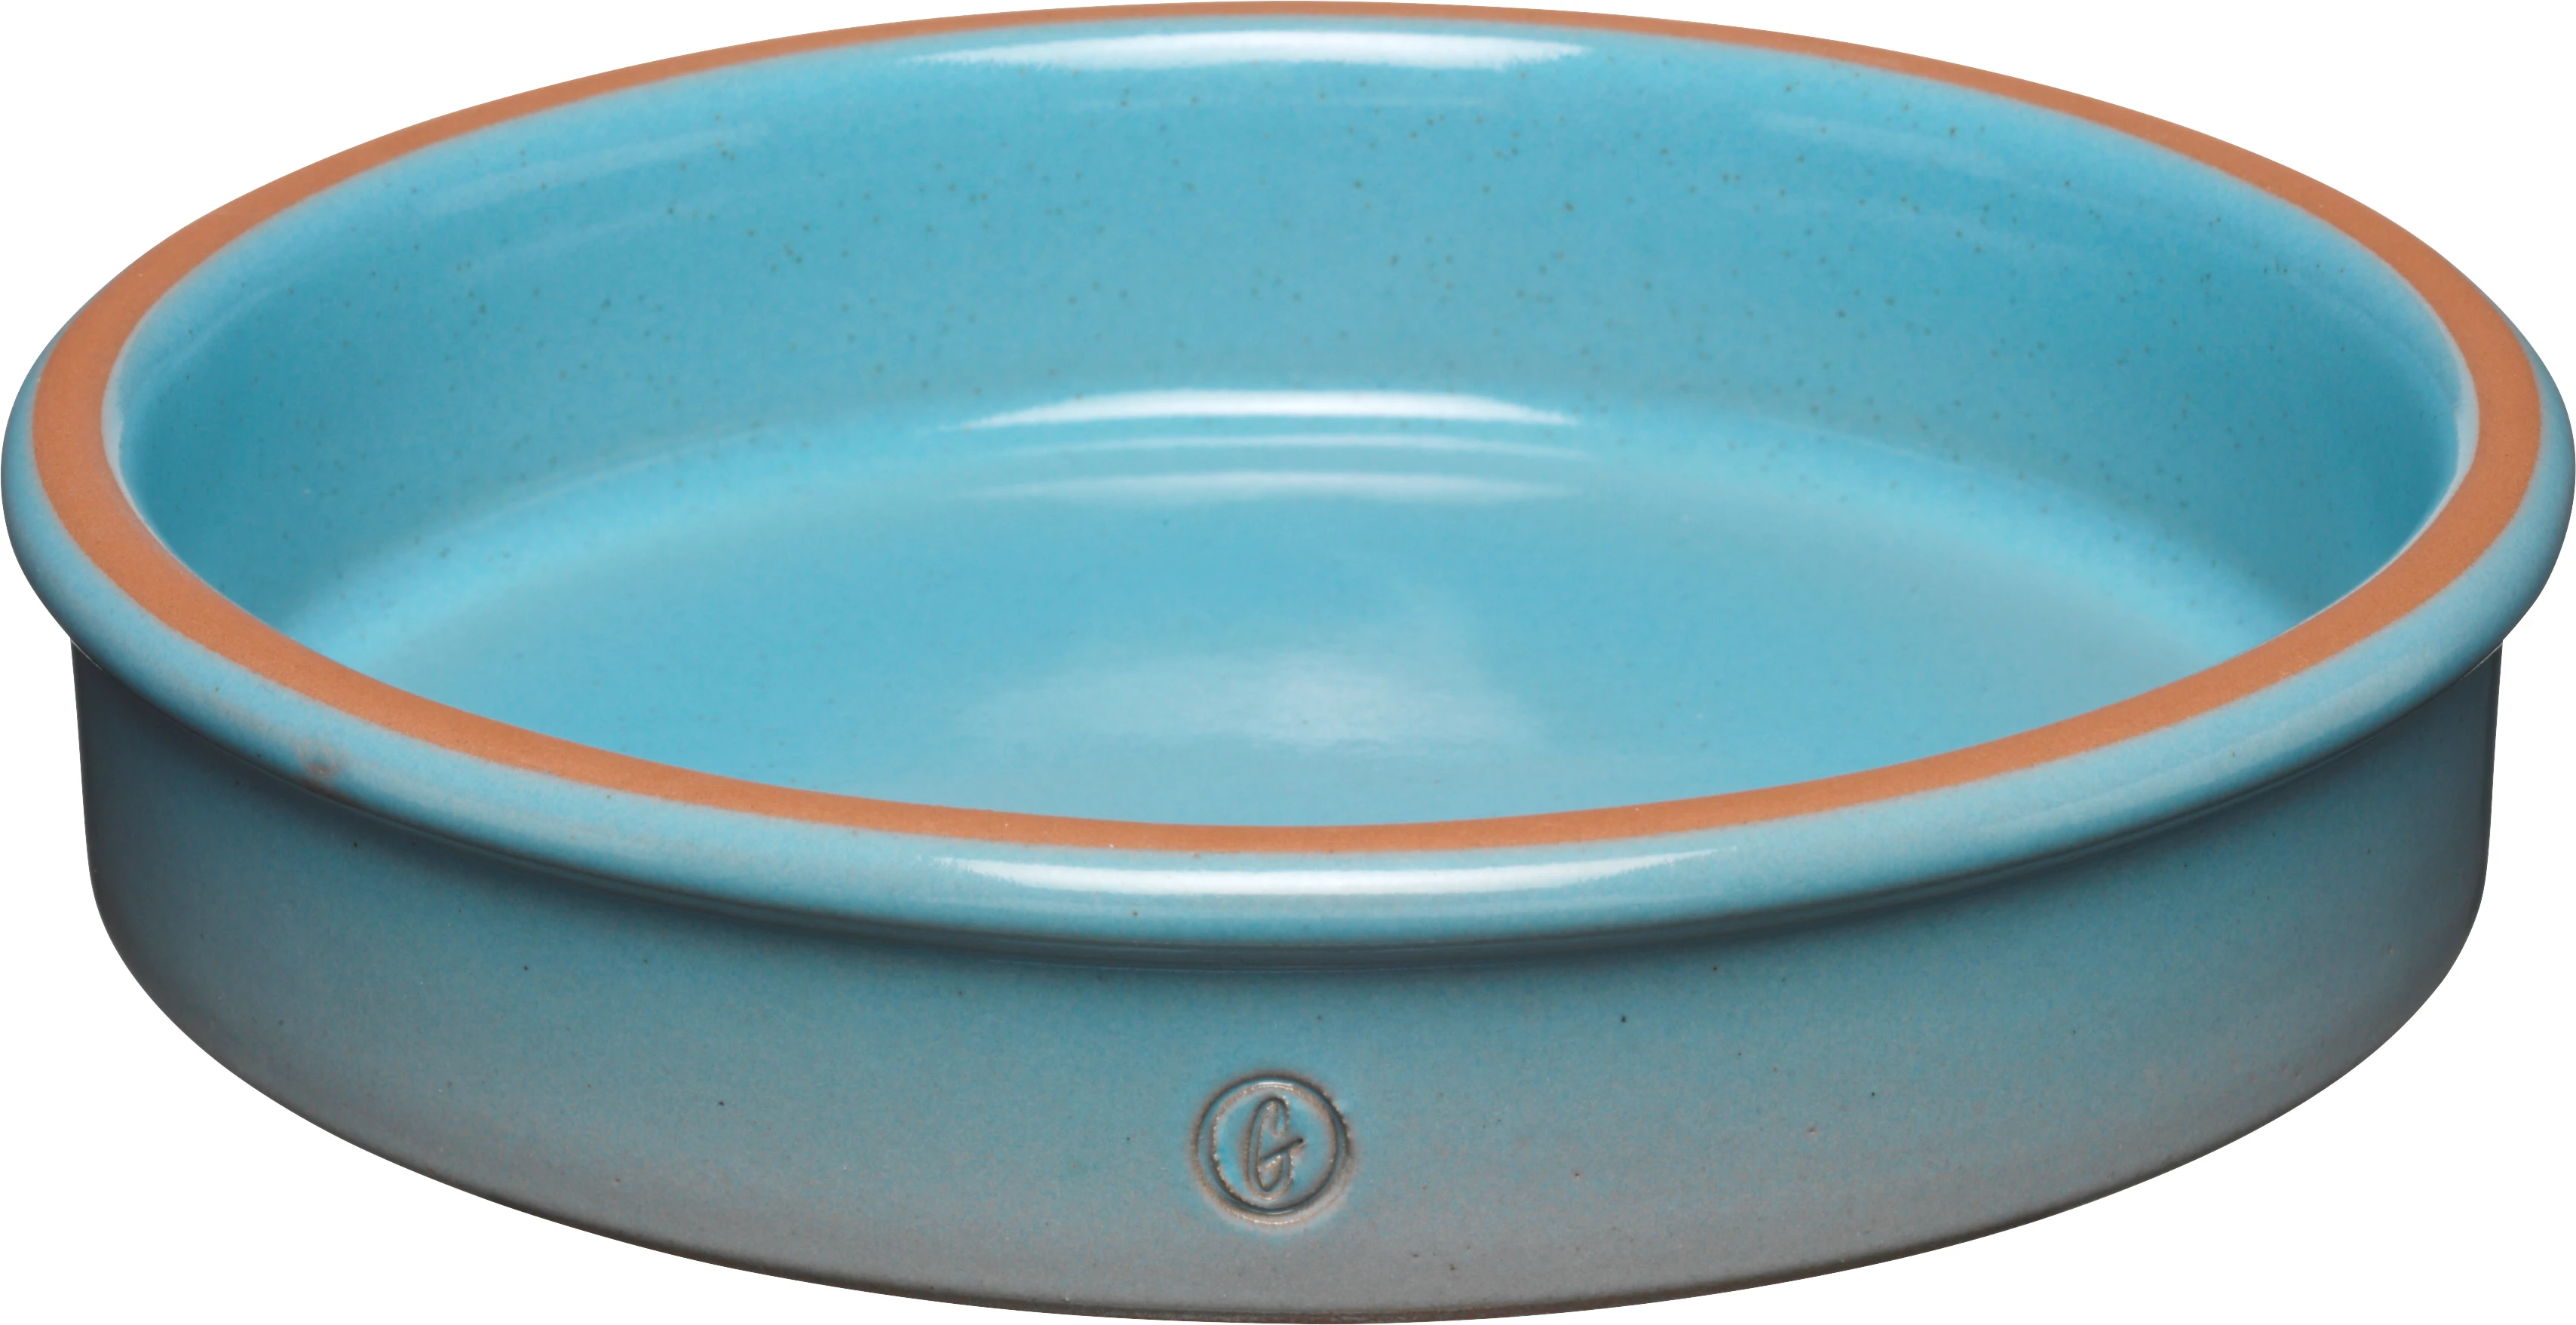 Graupera skål, lav, blå, ø13,5 cm